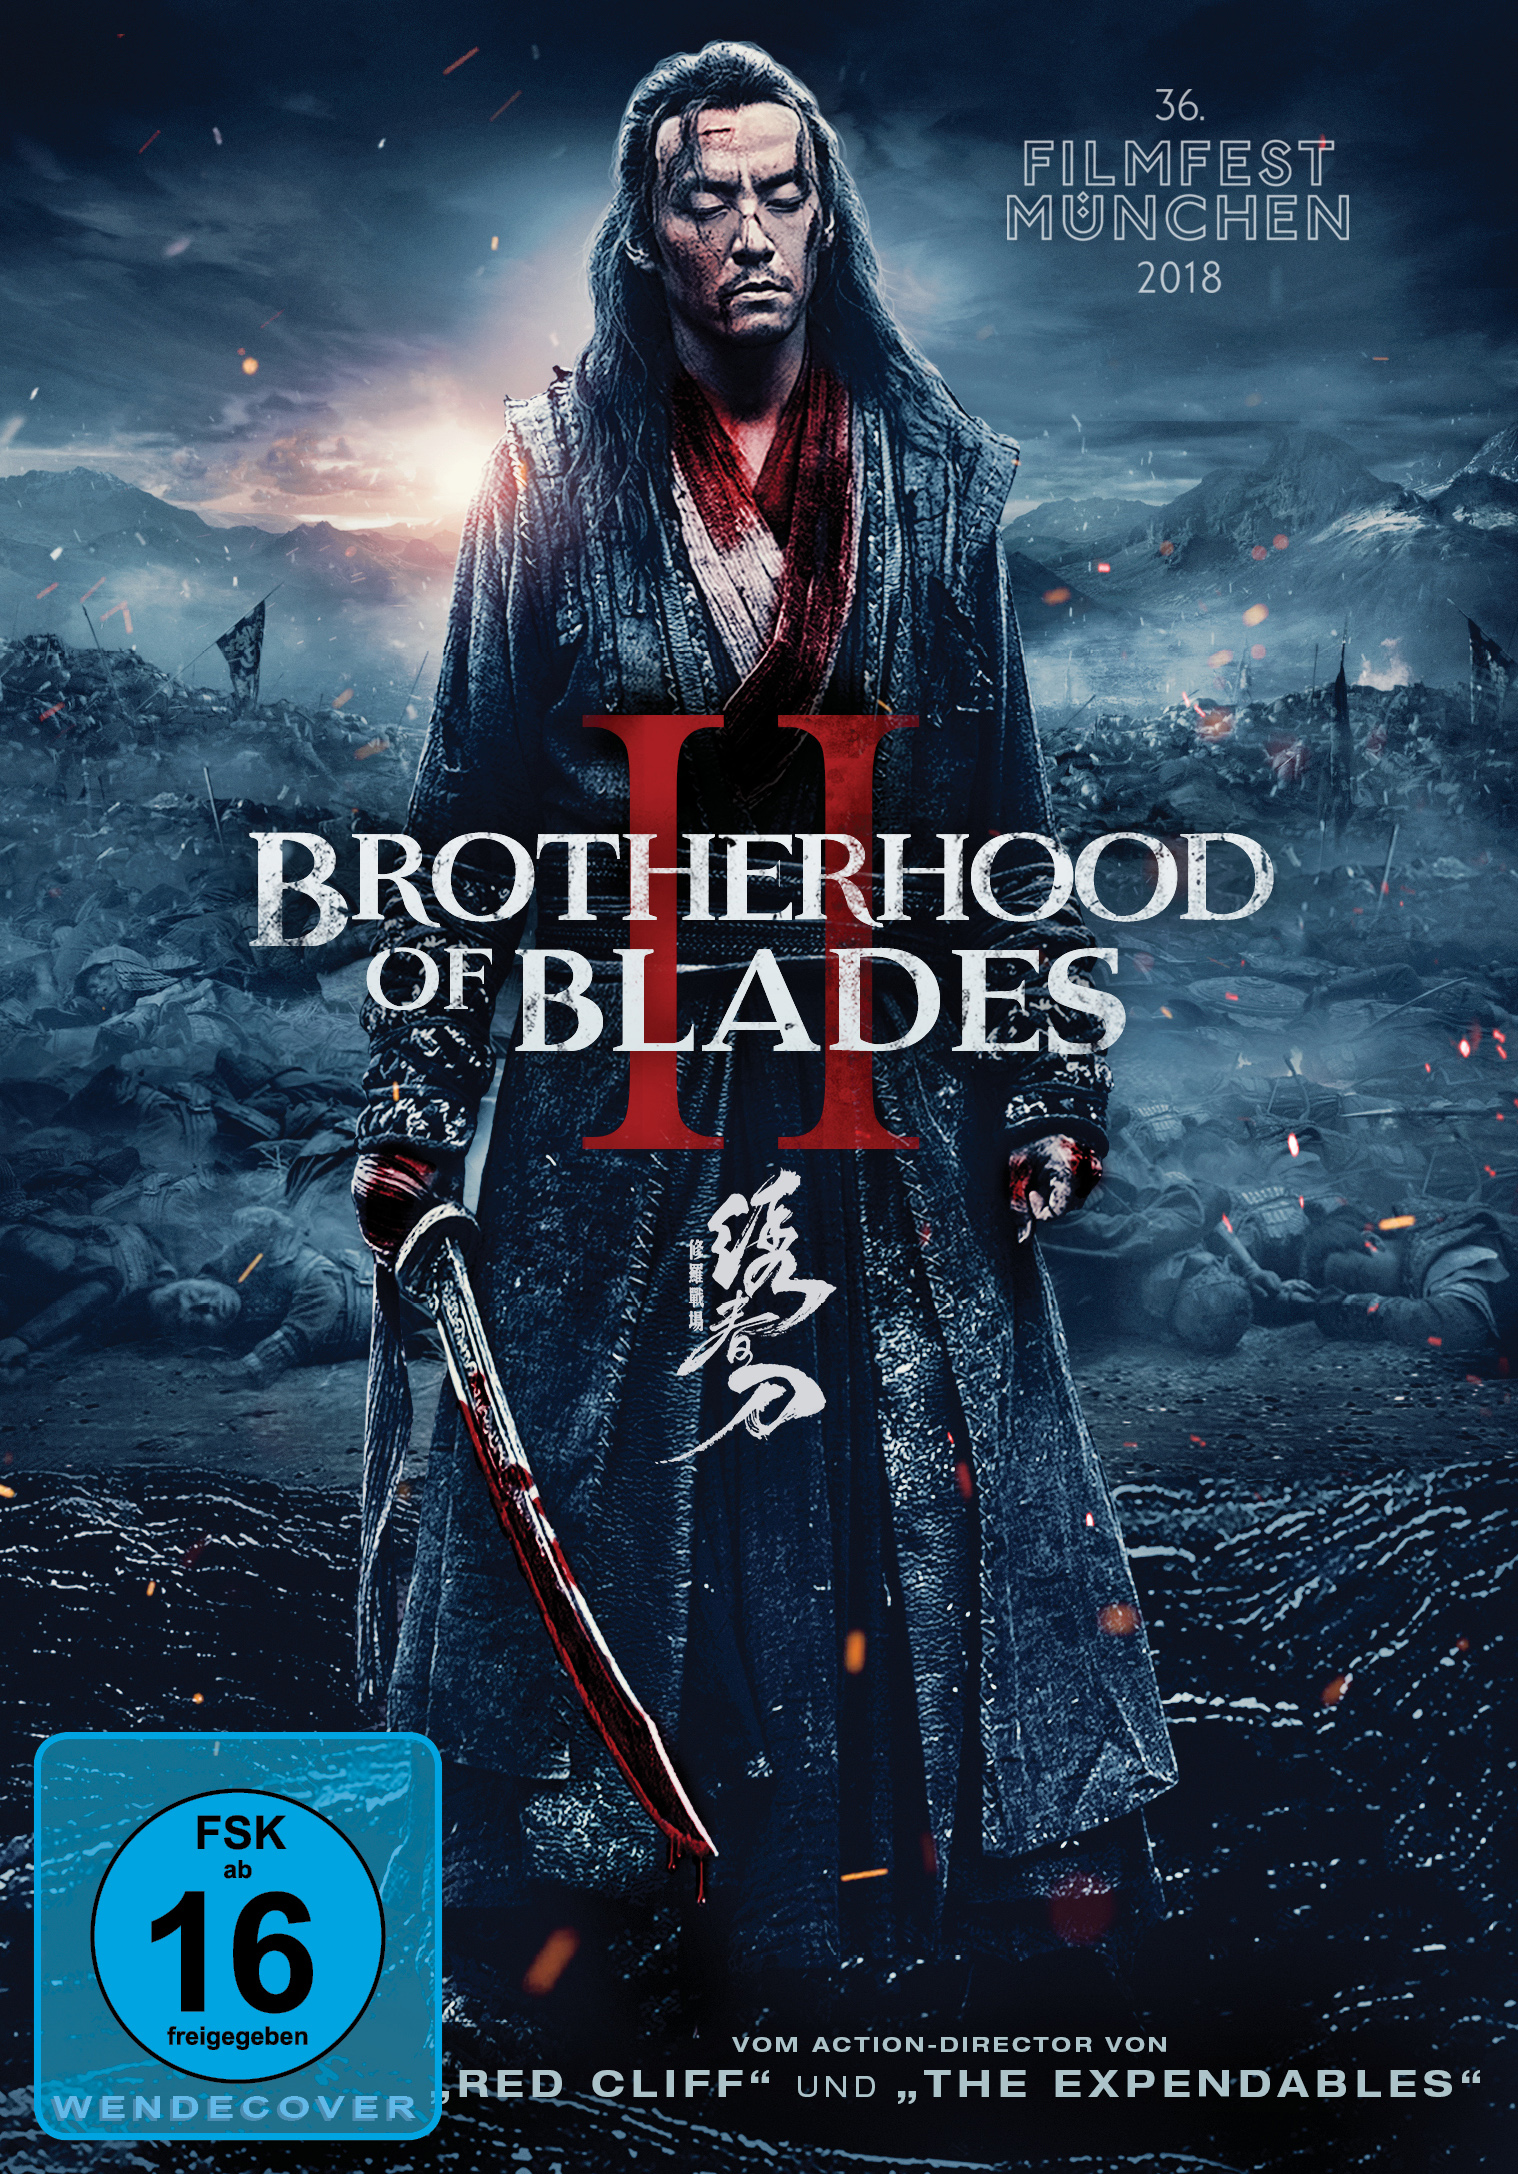 2 Brotherhood Of DVD Blades